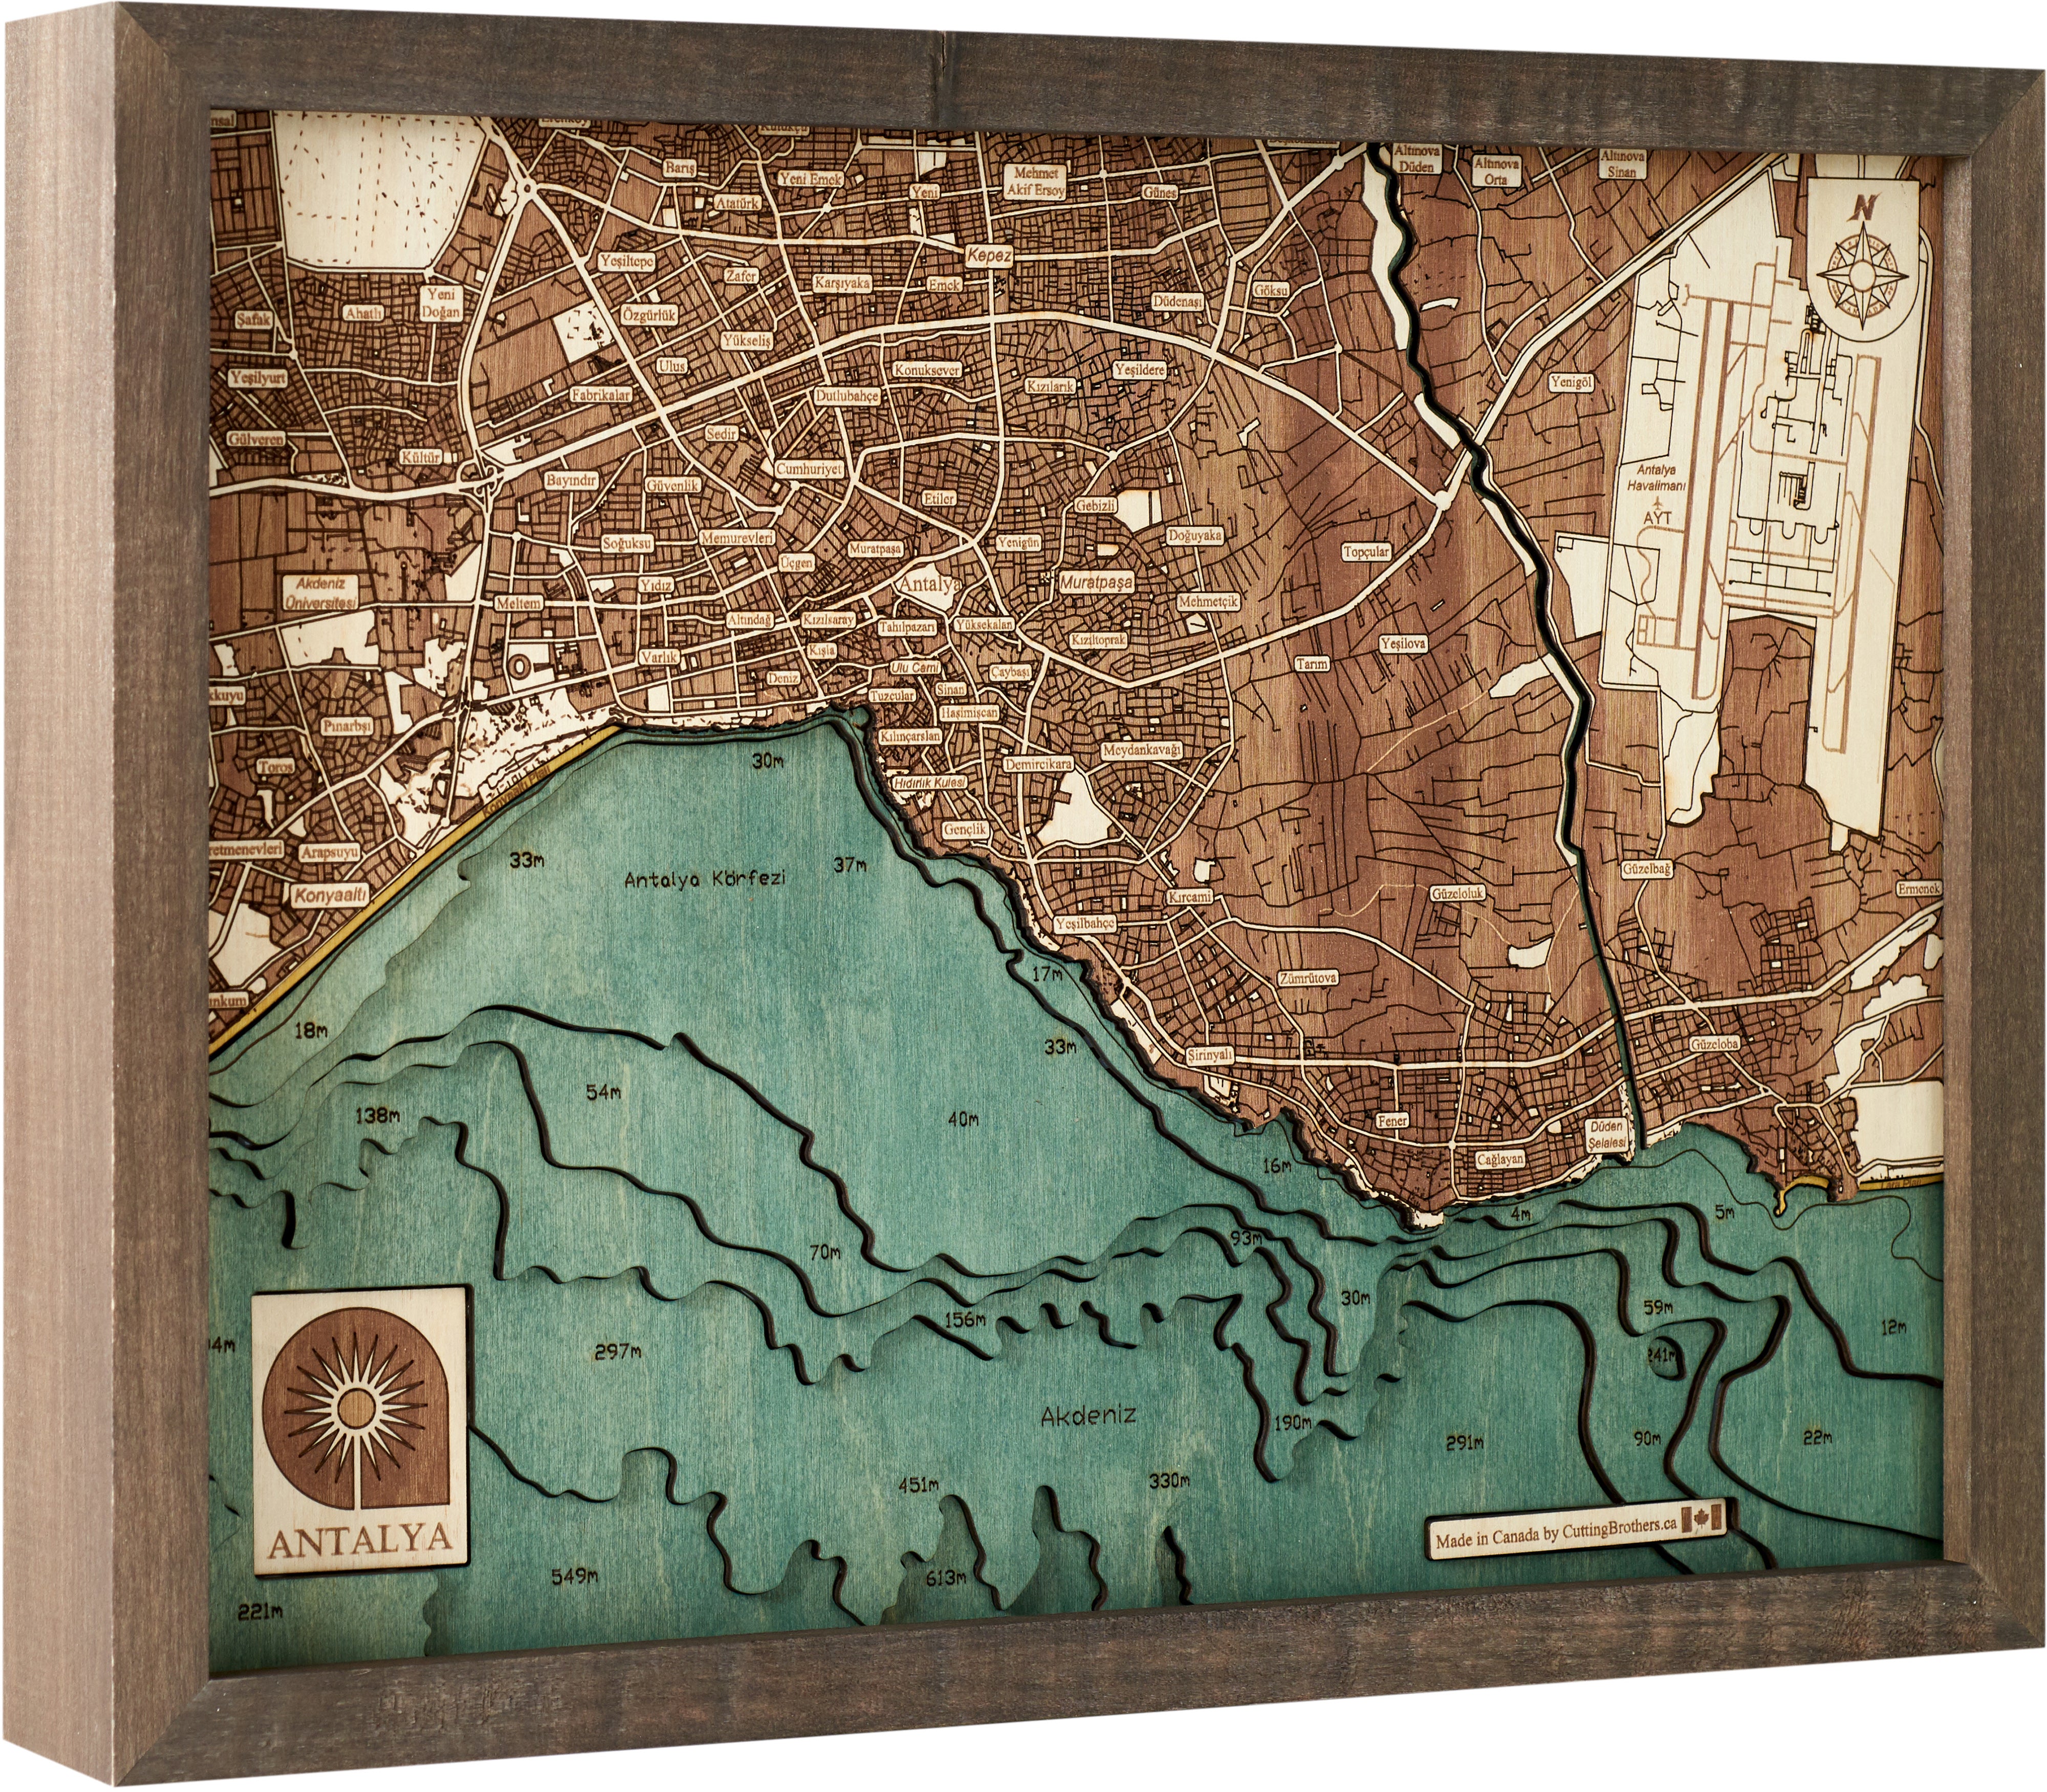 ANTALYA 3D Wooden Wall Map - Version S